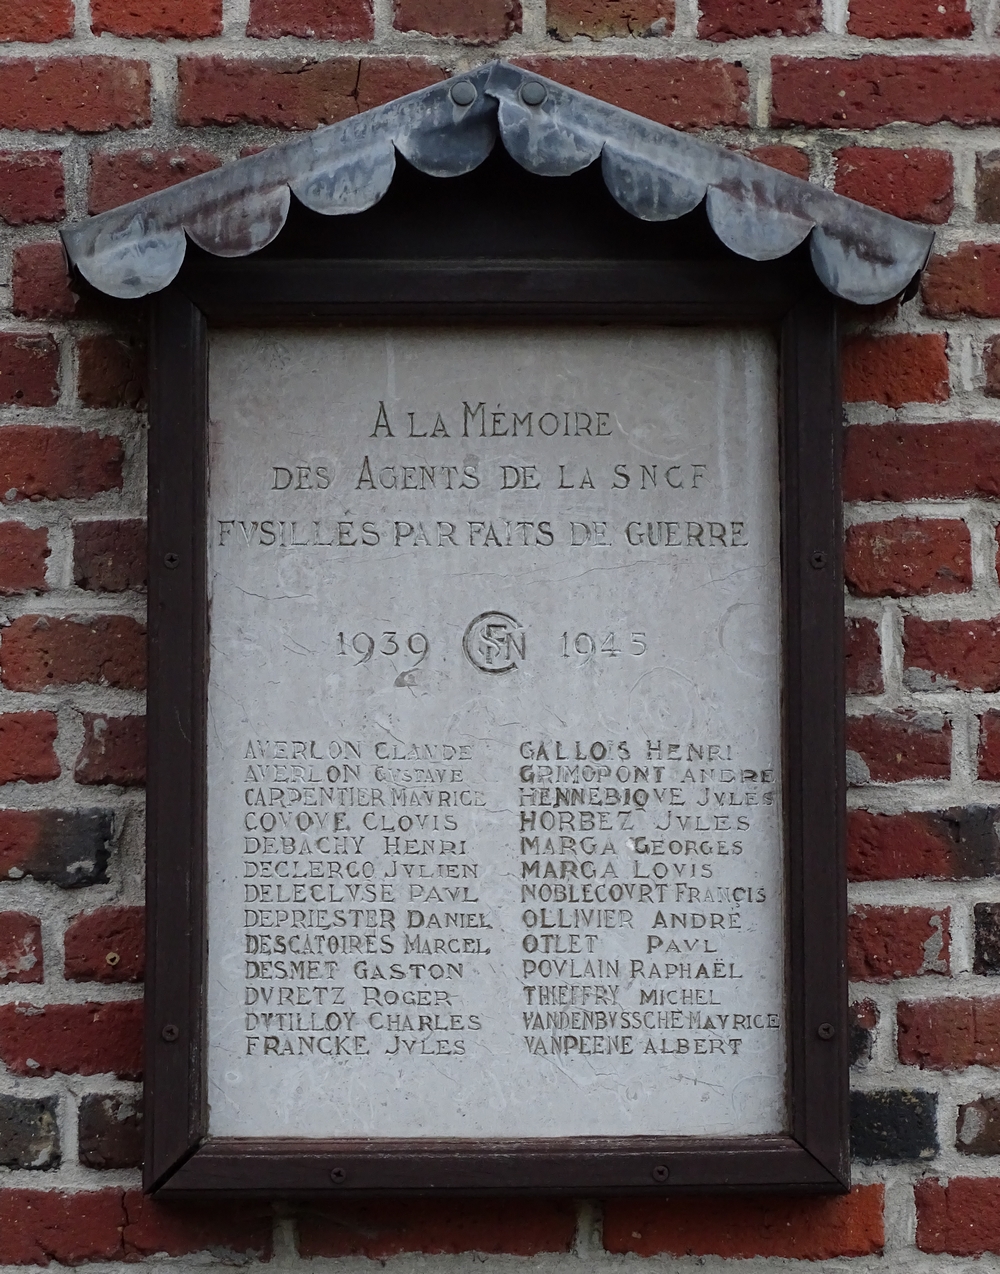 ascq plaque commemorative